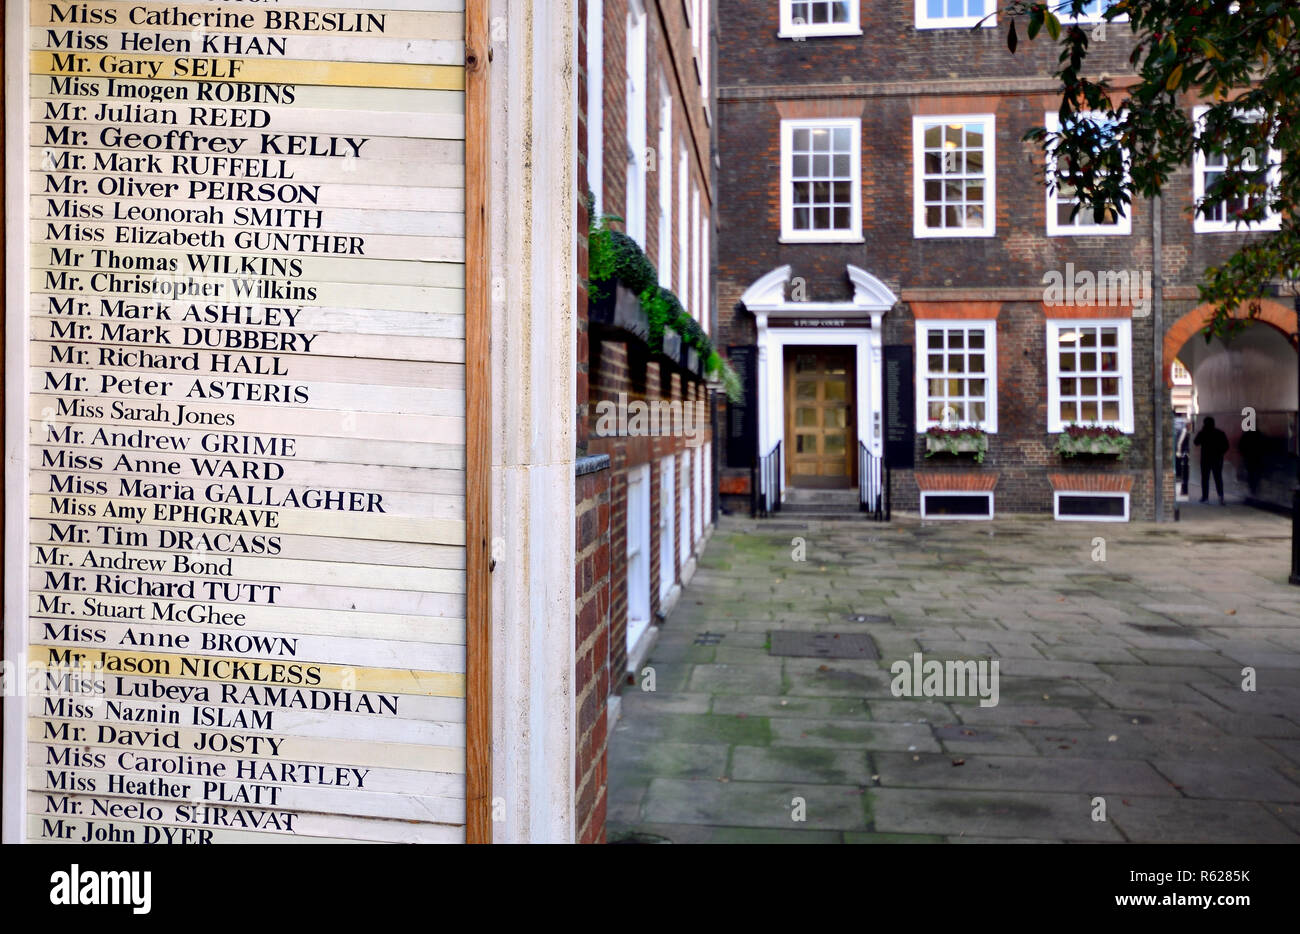 Liste der Juristen in den Kammern in der Pumpe Hof, inneren Tempel, London, England, UK. Stockfoto